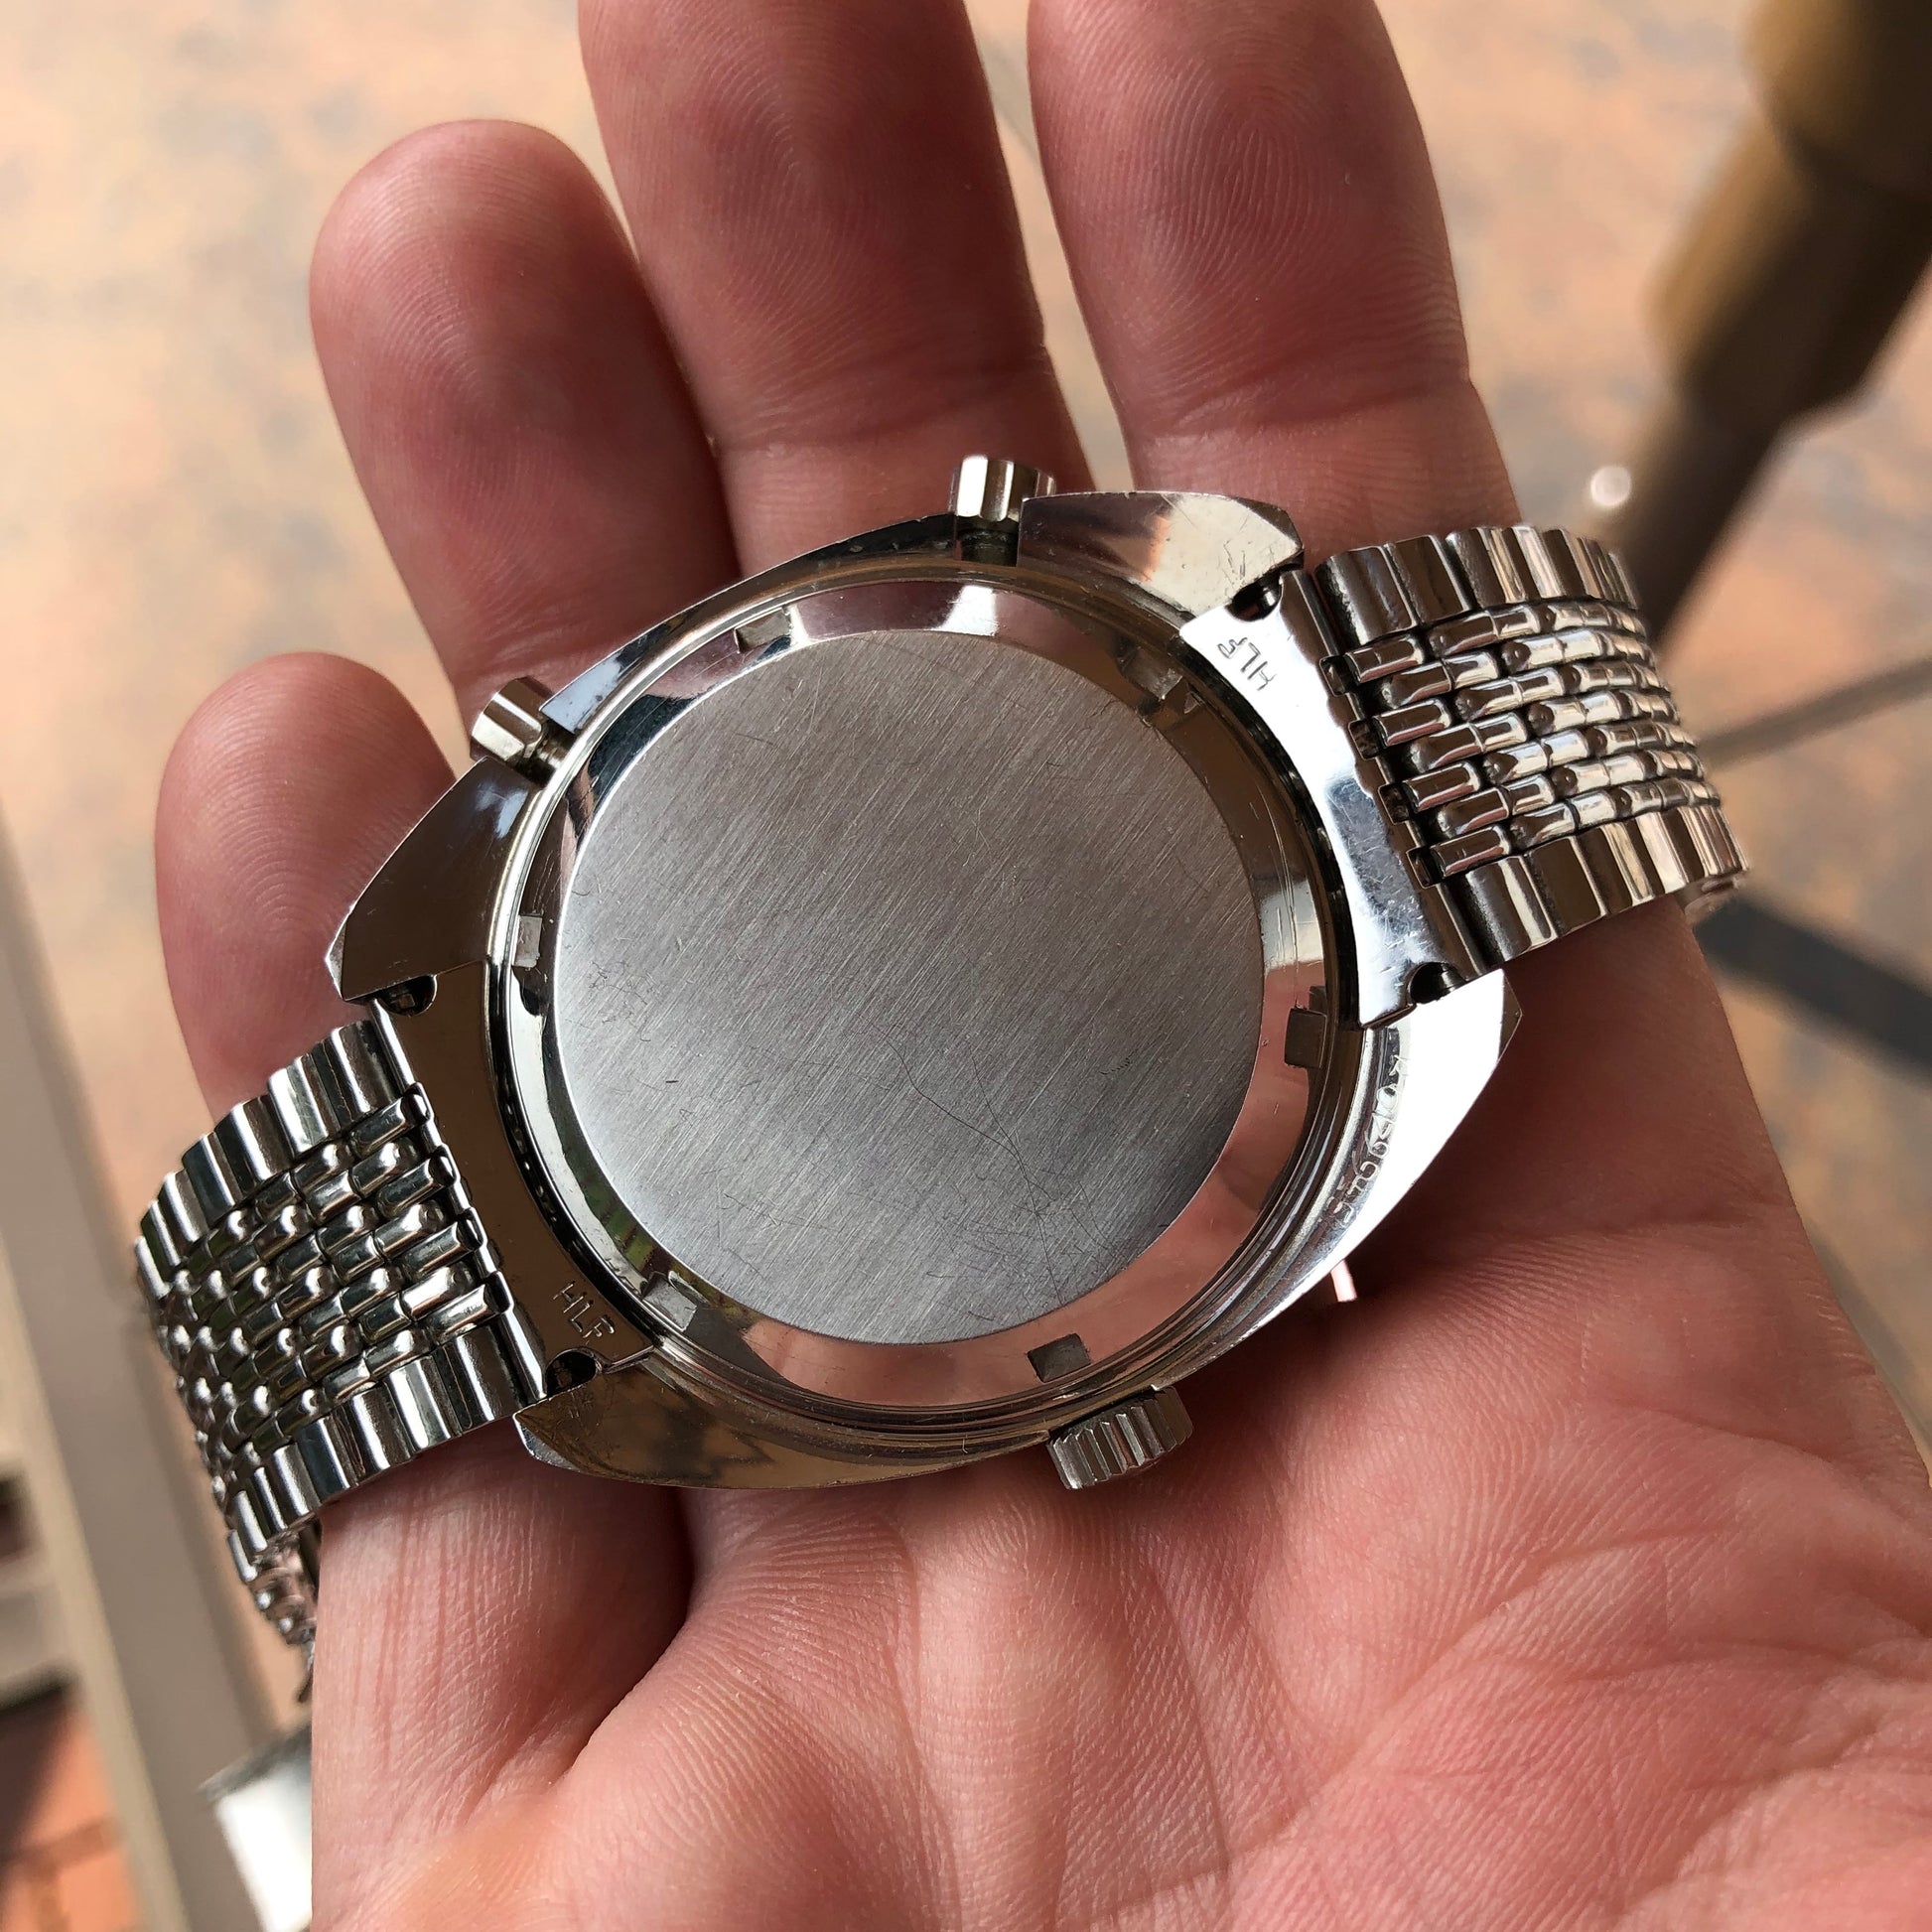 1972 Vintage Heuer Autavia 1163 Viceroy Steel Chronograph Cal. 12 Automatic Wristwatch - Hashtag Watch Company